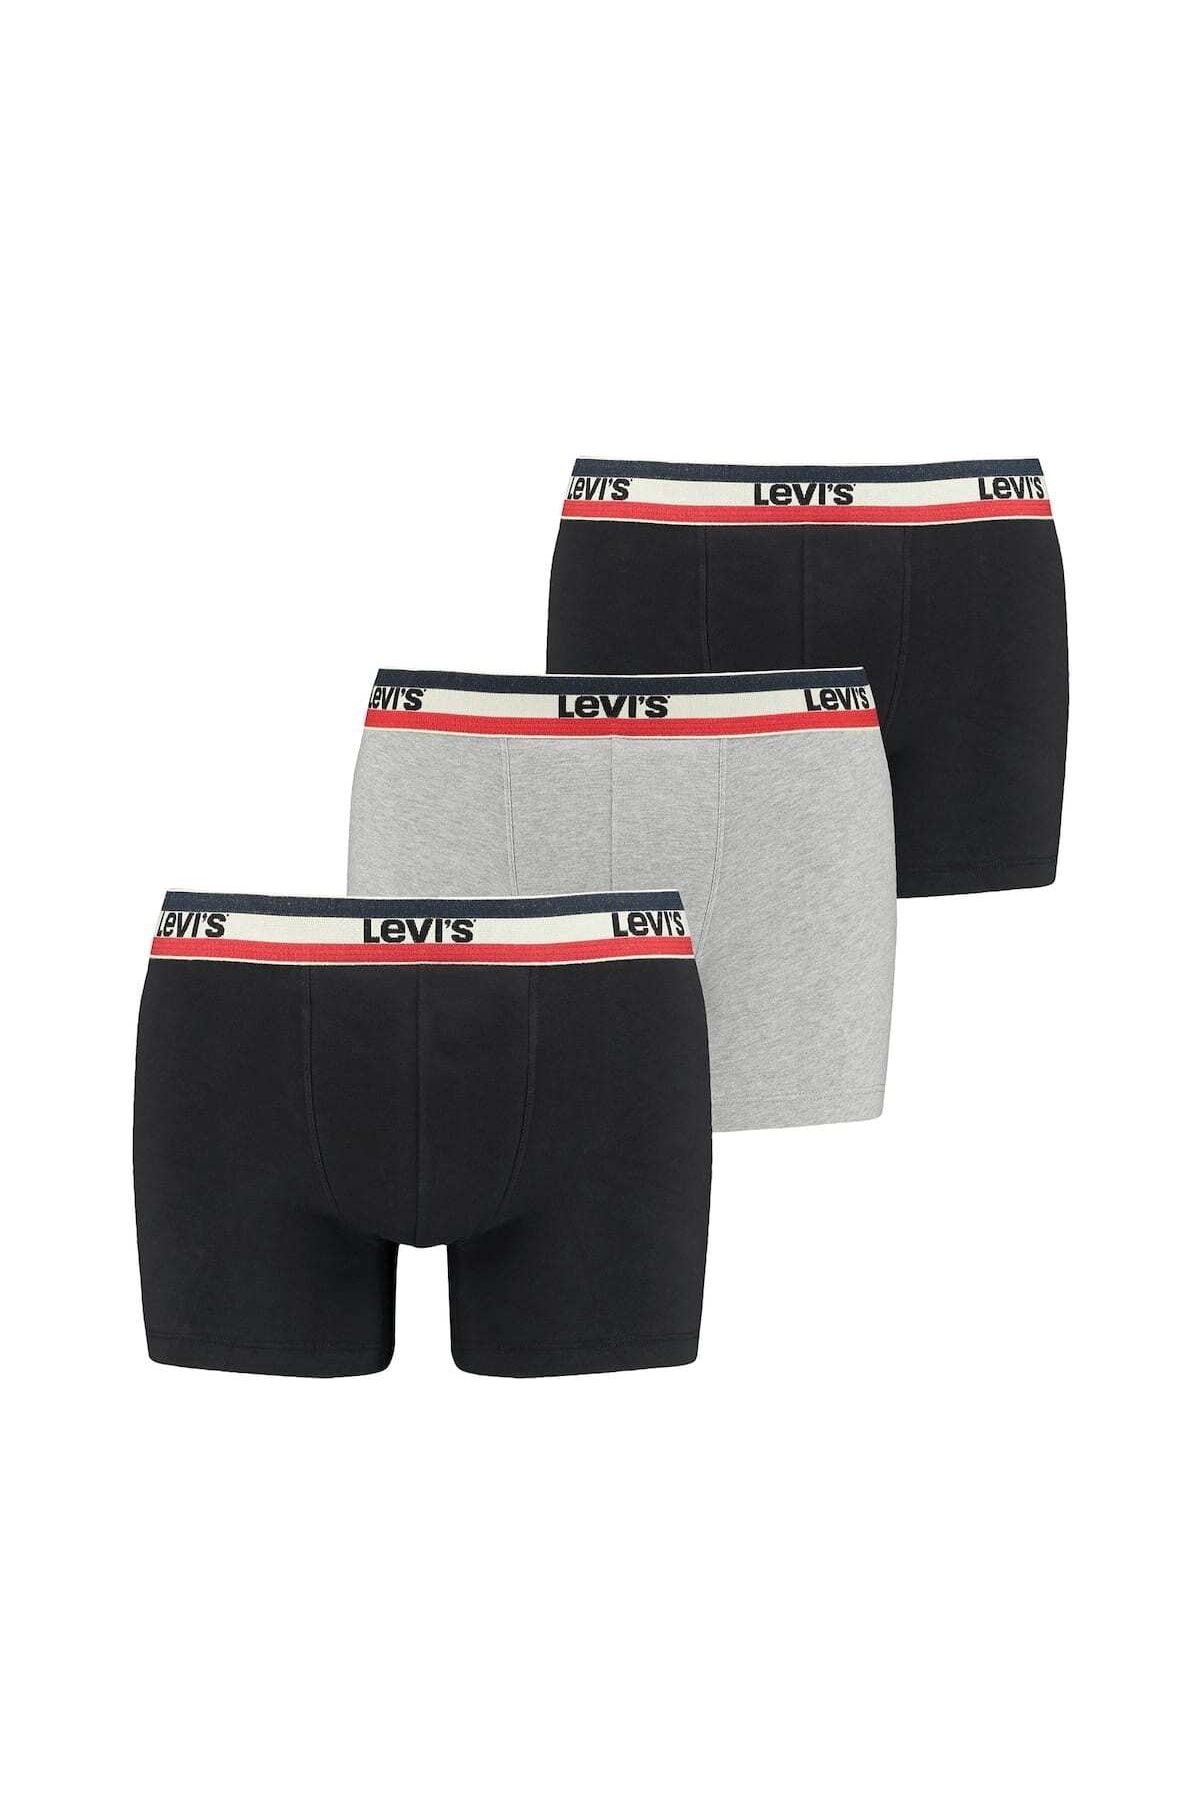 Levi's Boxershorts Mehrfarbig Unifarben Fast ausverkauft